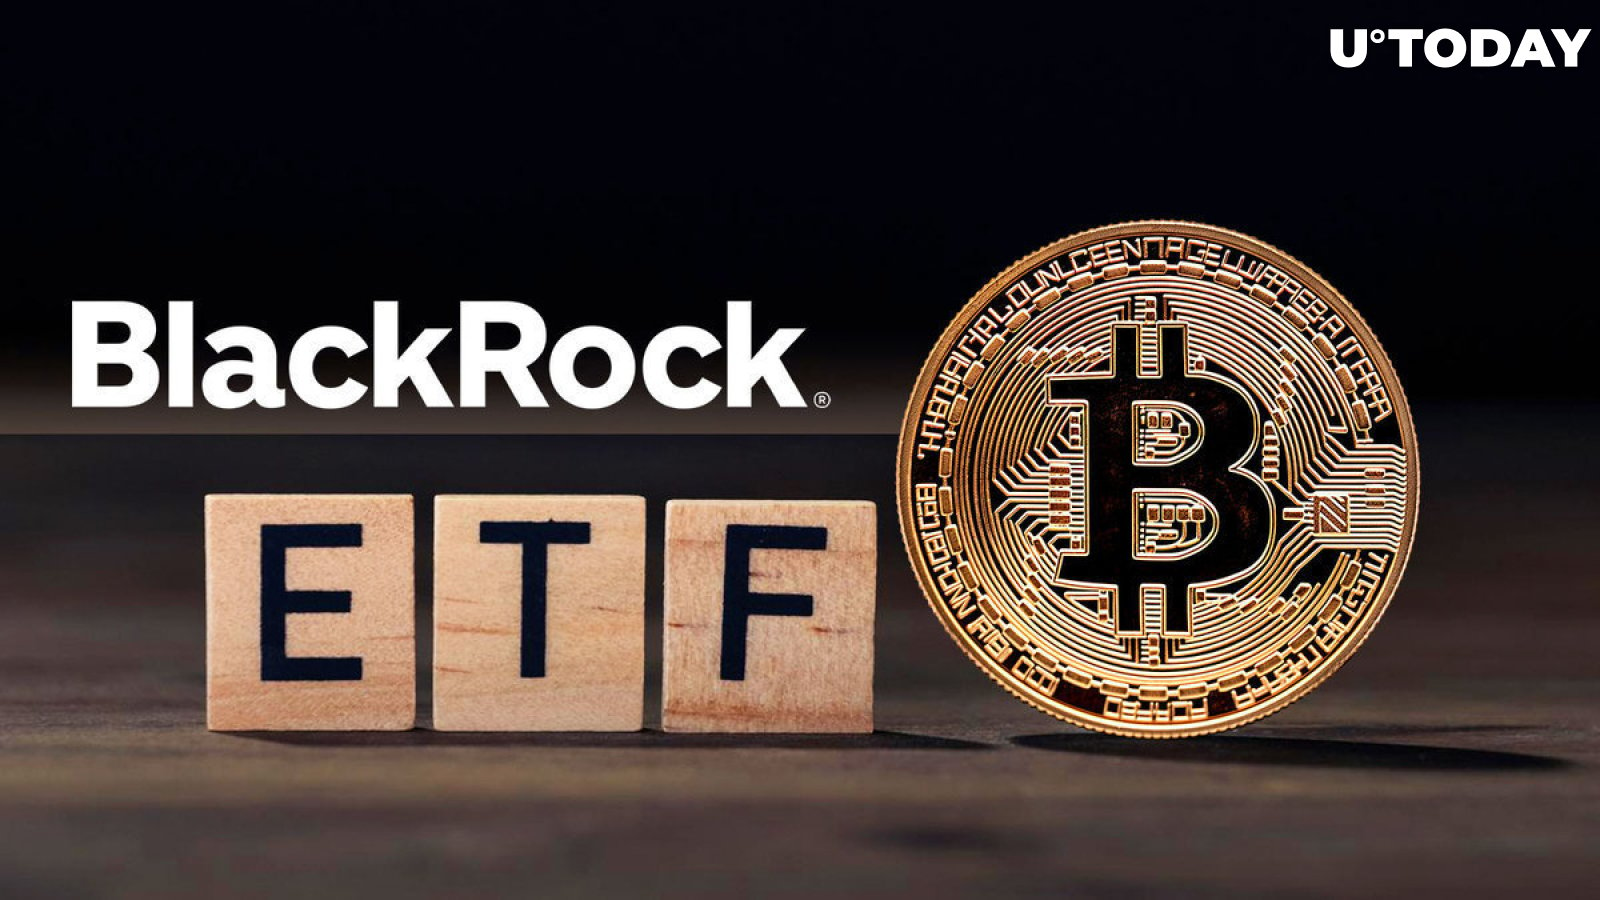 BlackRock's Bitcoin ETF About to Break Major Milestone After 69 Day Inflow Streak